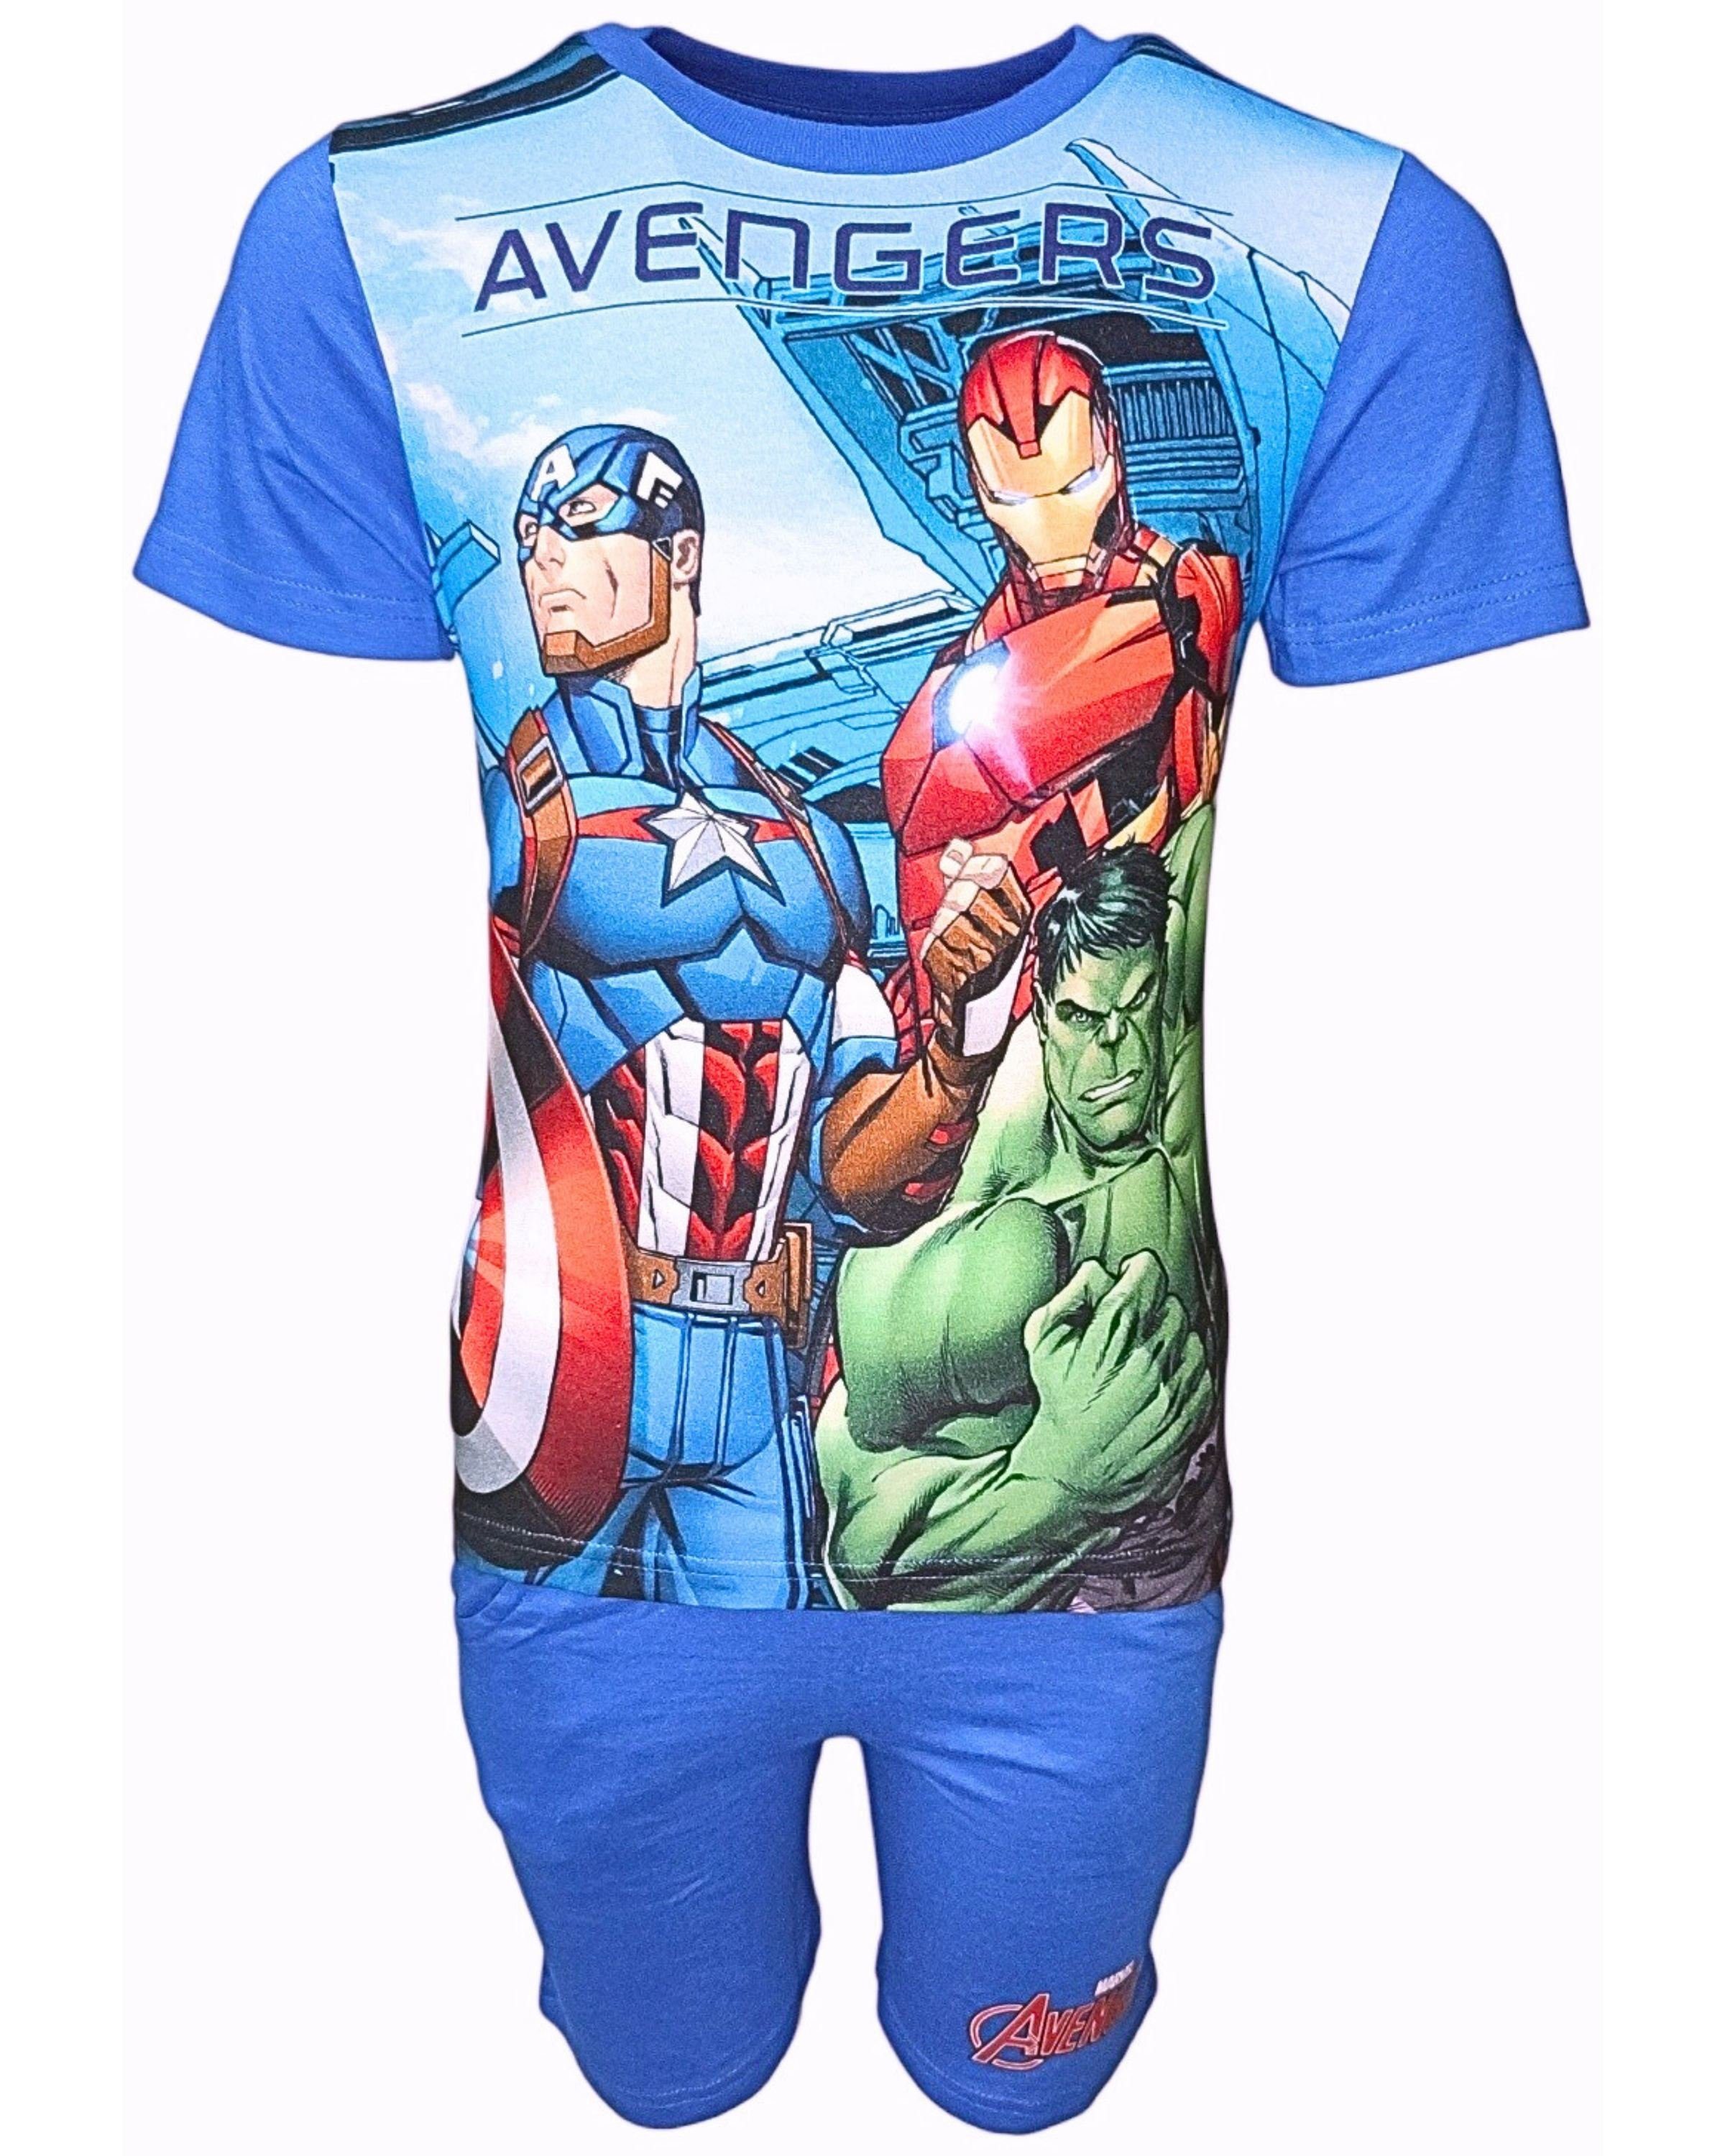 The AVENGERS Shorty Marvel (2 tlg) Jungen Set T-Shirt & Kurze Hose Gr. 98 - 128 cm Blau